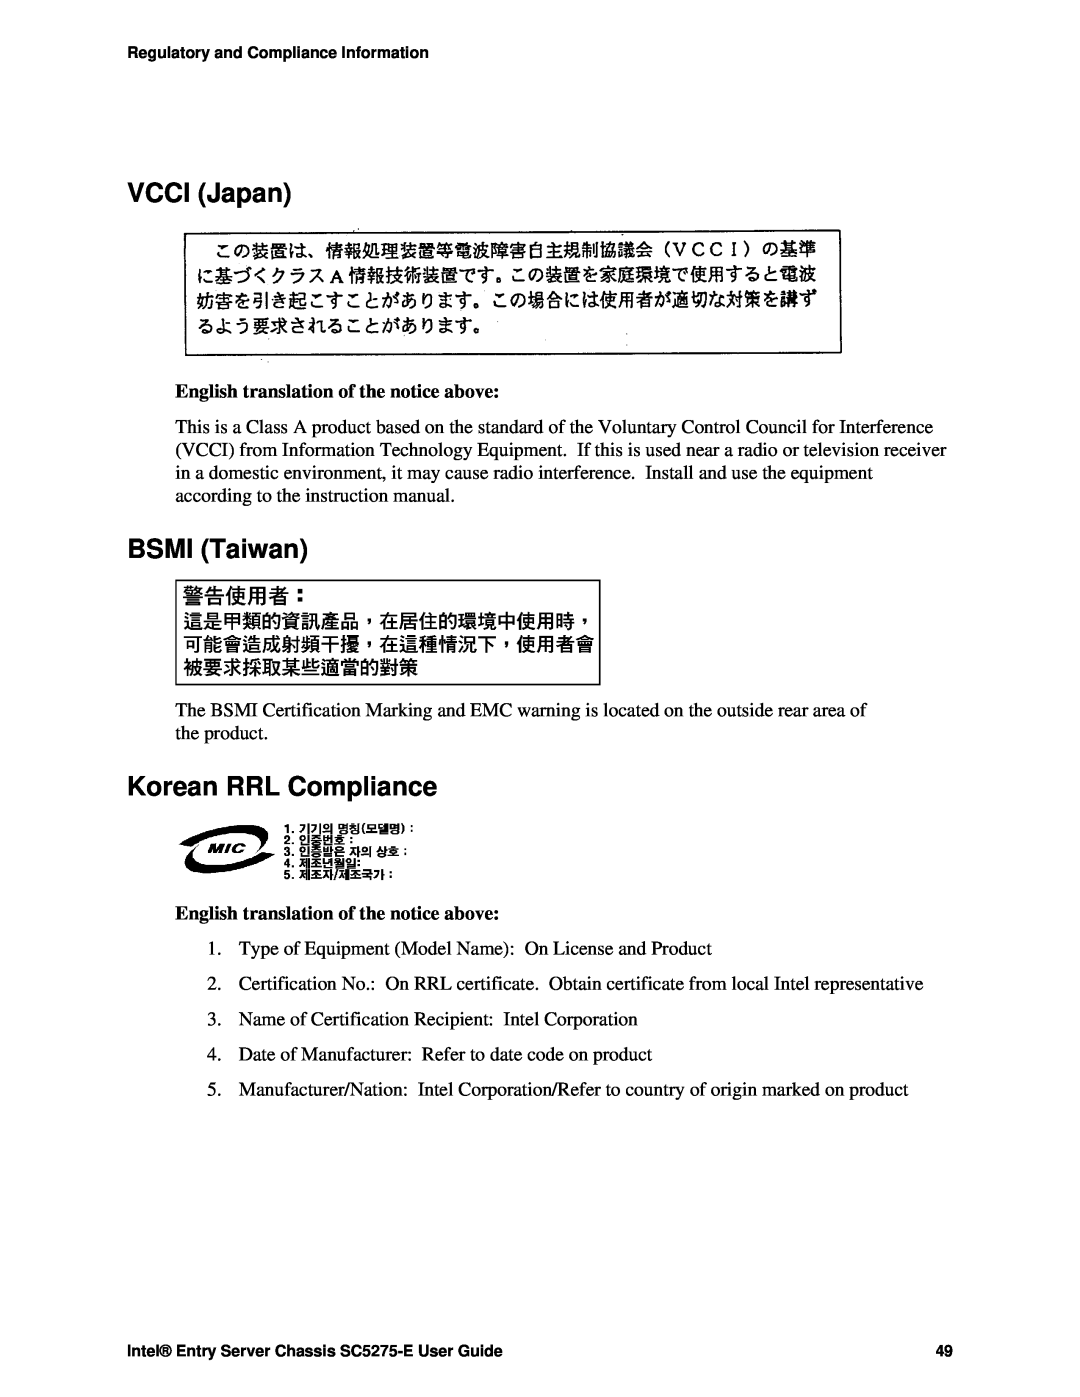 Intel C50277-001, SC5275-E manual VCCI Japan, BSMI Taiwan, Korean RRL Compliance 